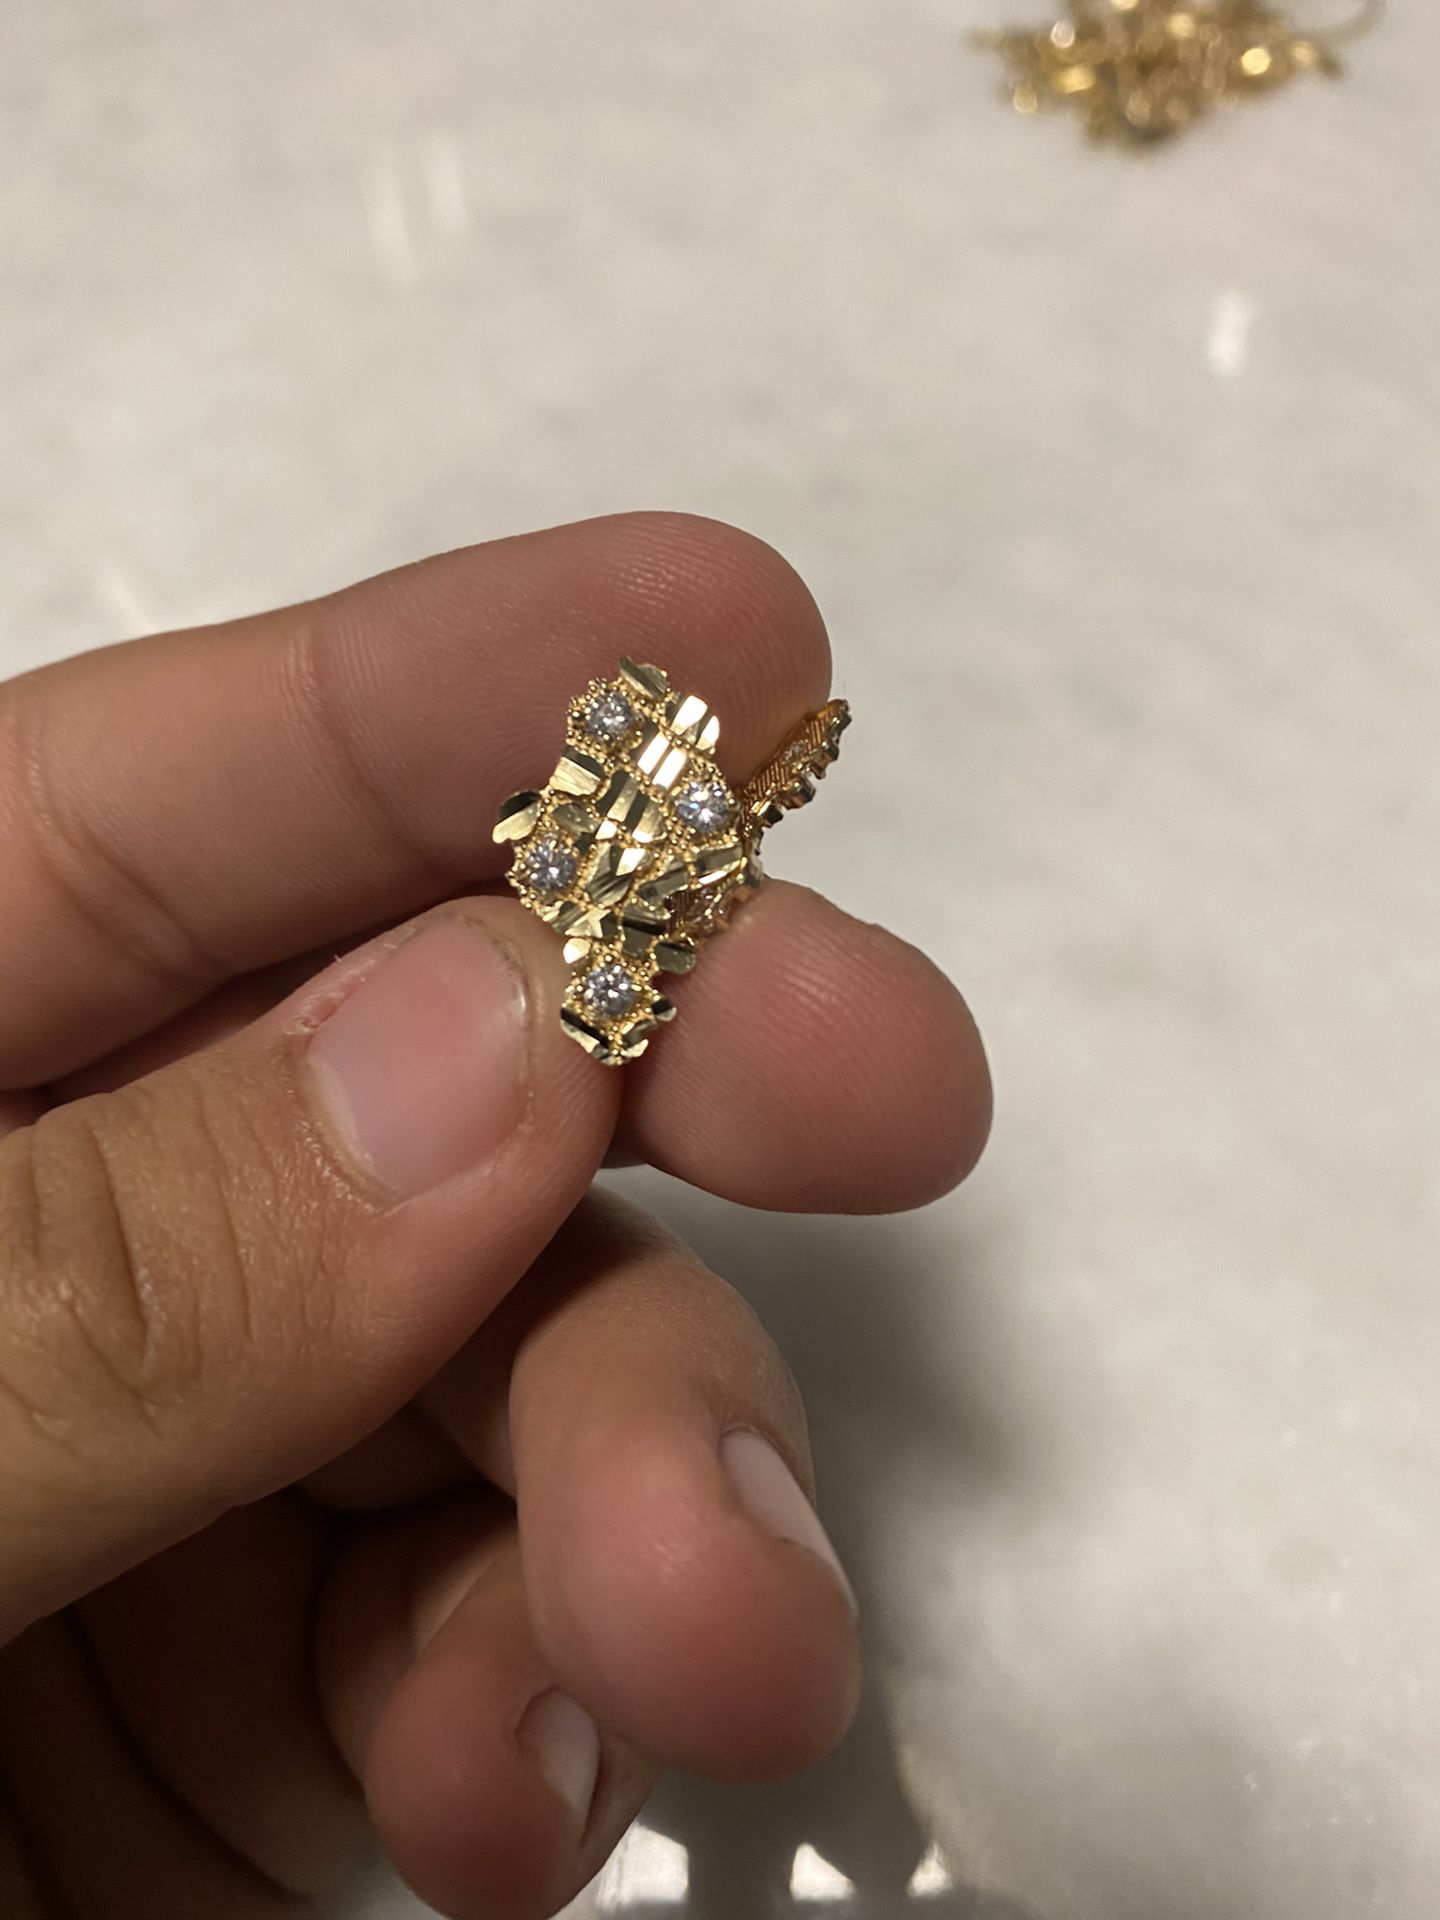 Diamond nugget earrings